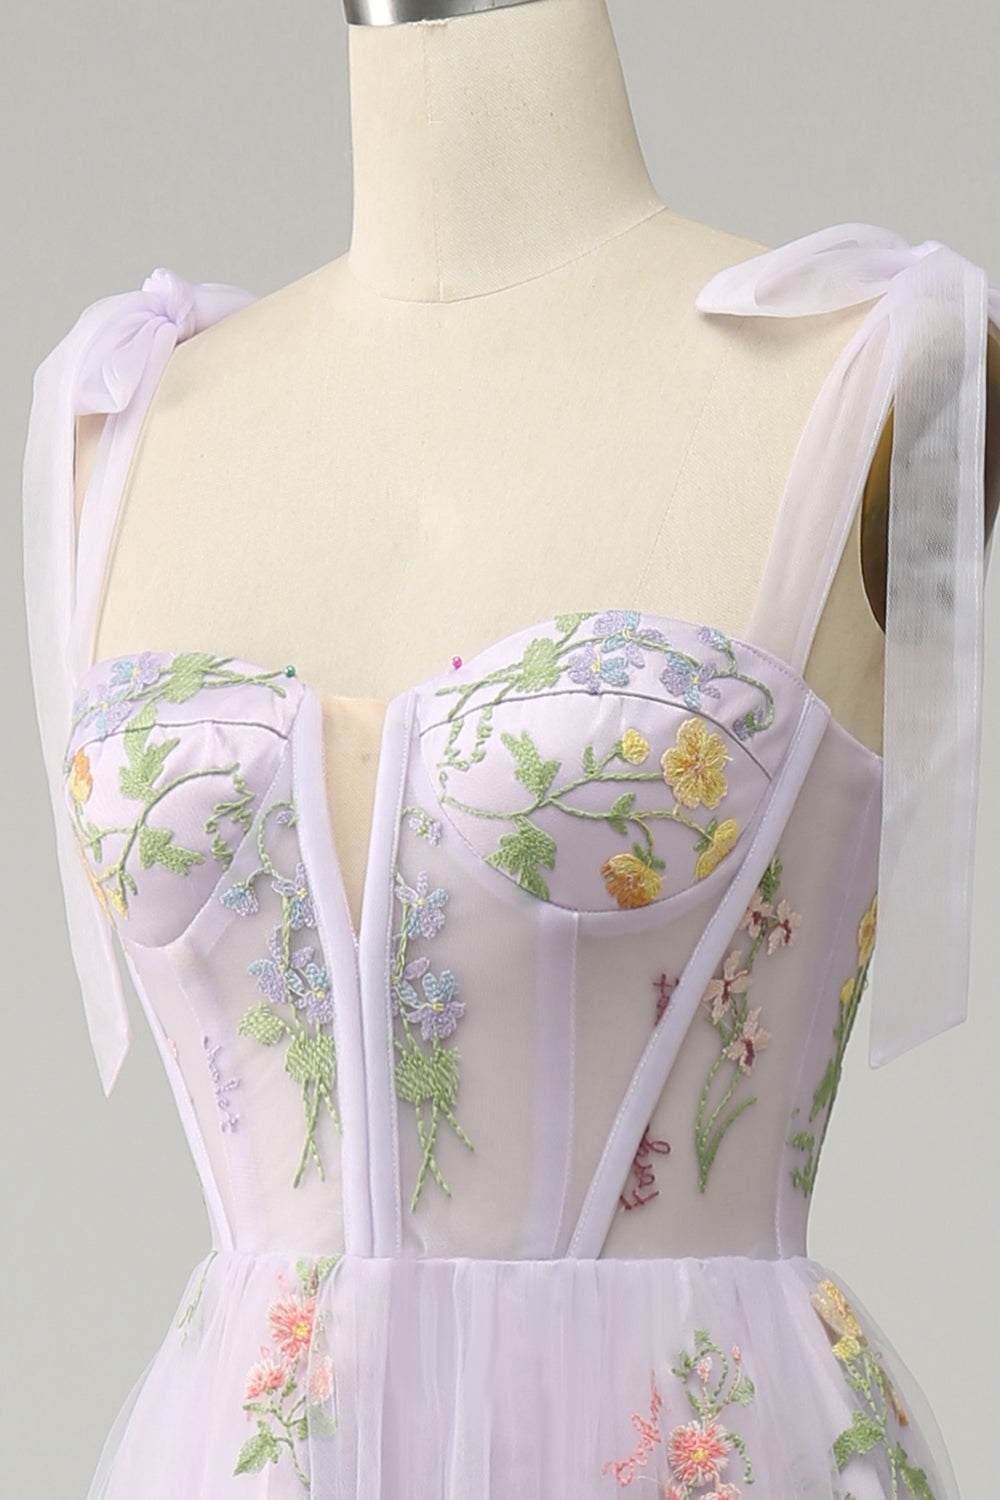 Zapaka Women Lilac Embroidery Corset Long Prom Dress A-Line Formal Party  Dress – ZAPAKA